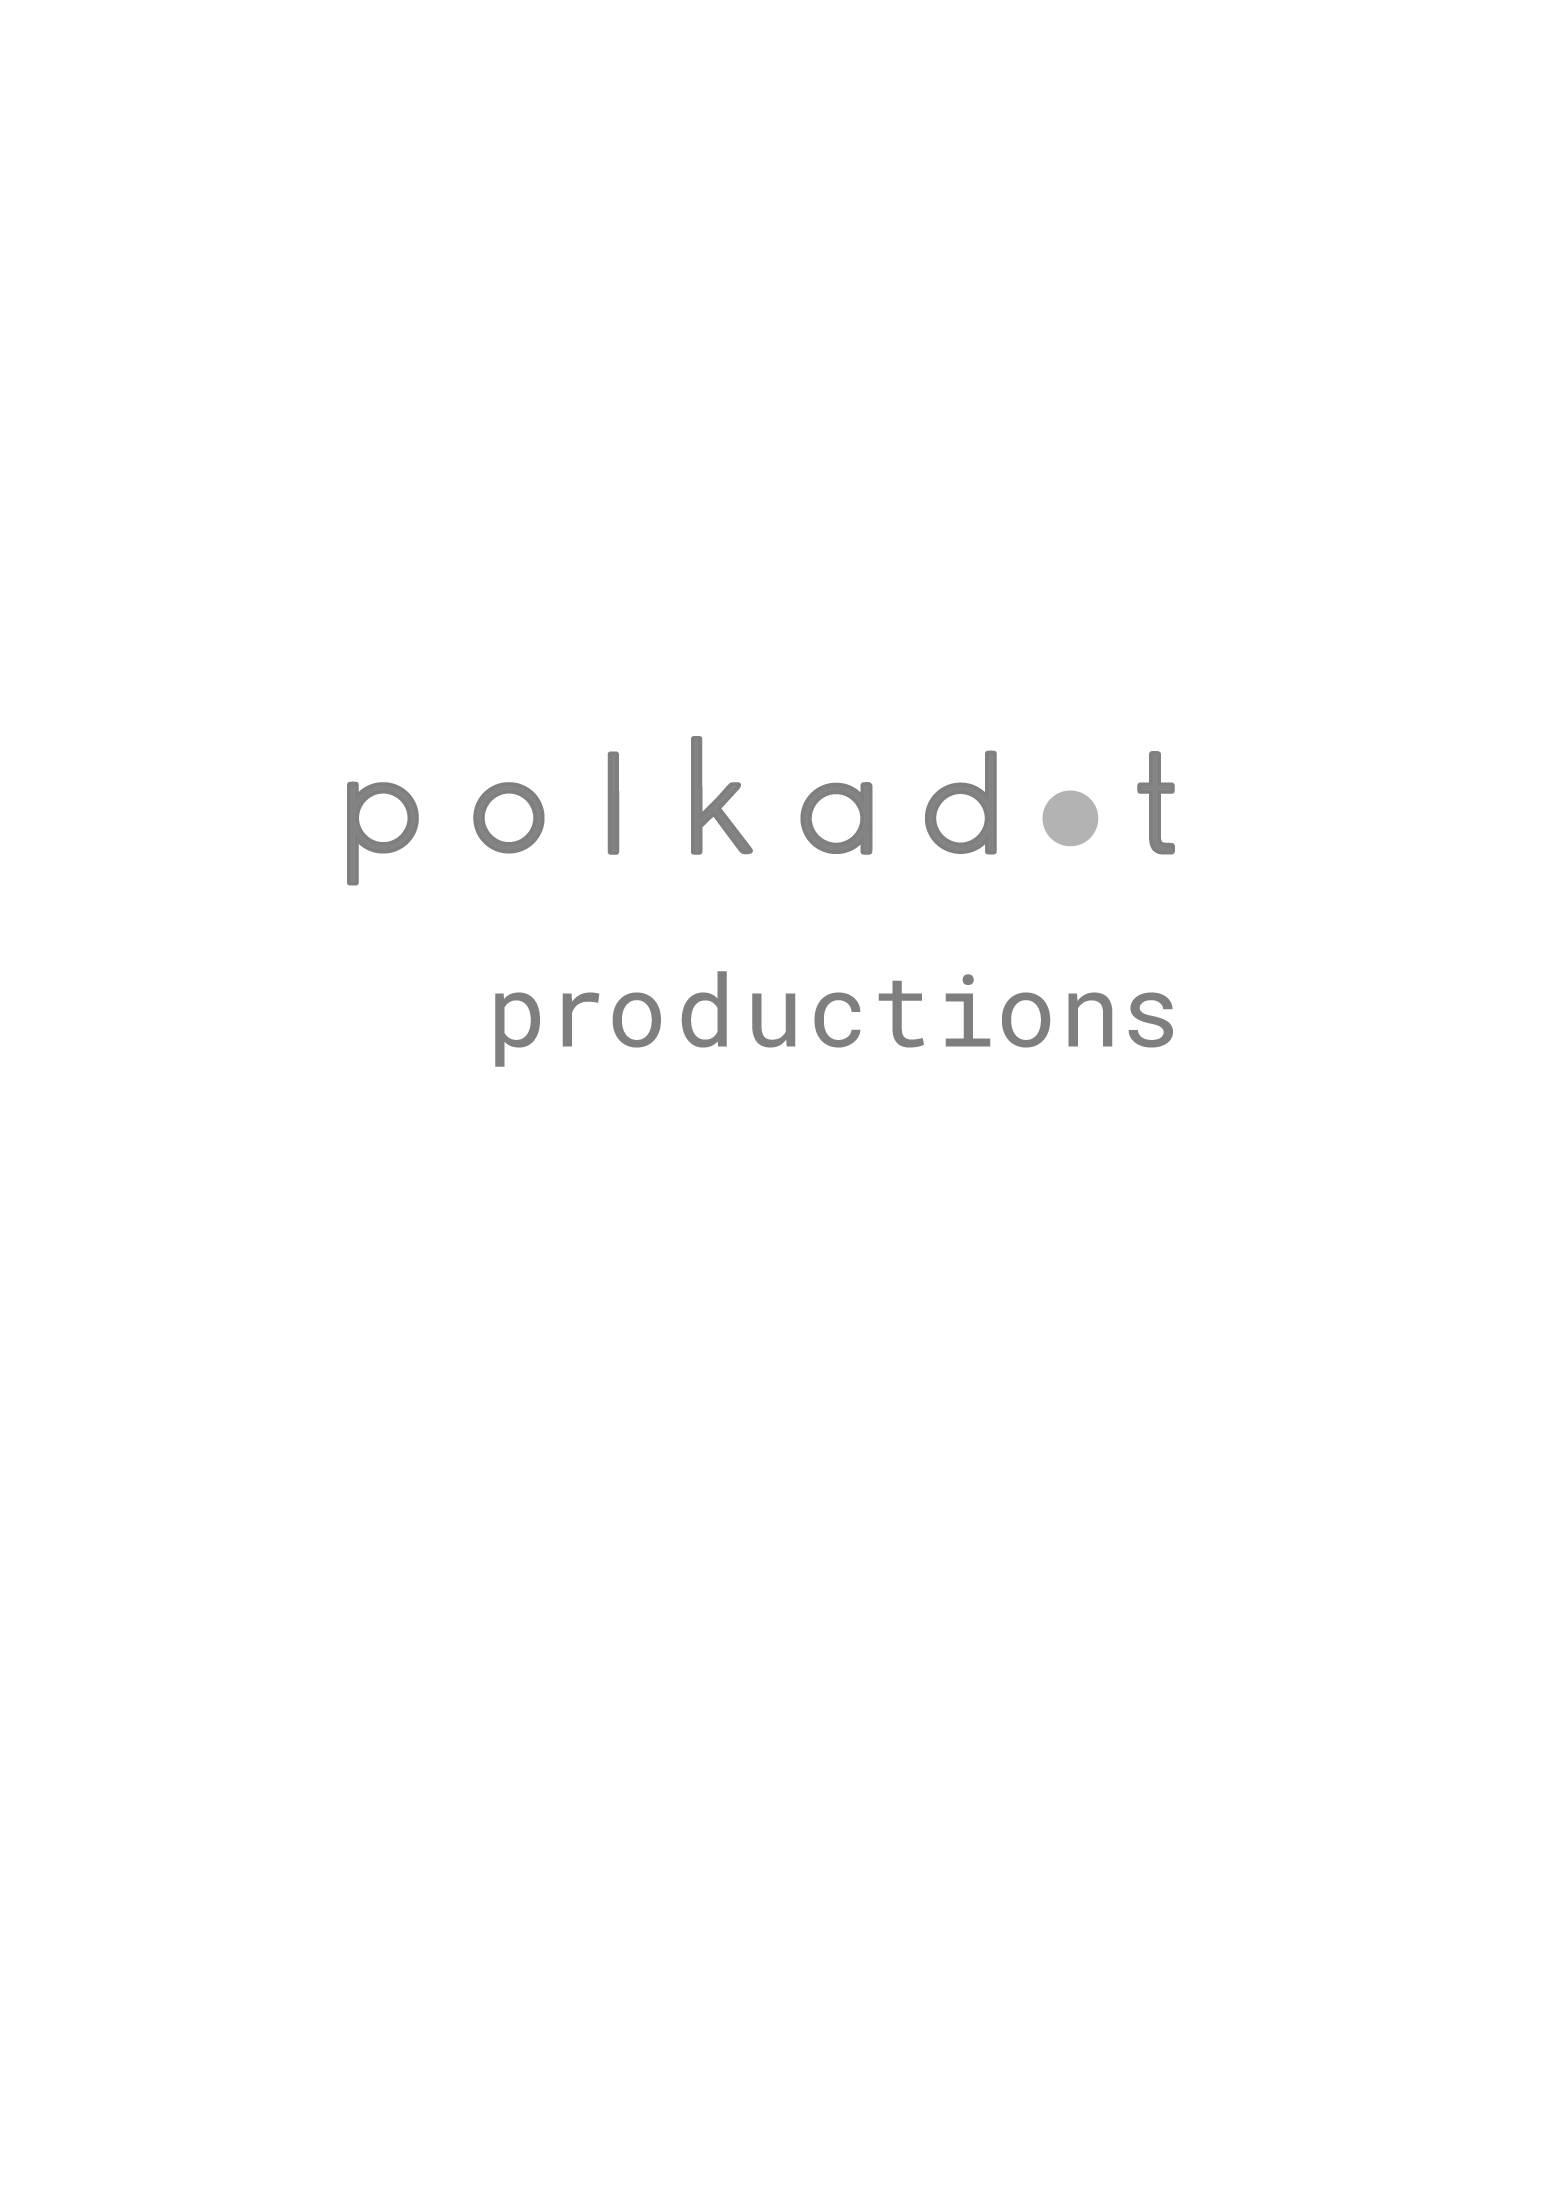 polkadot productions logo